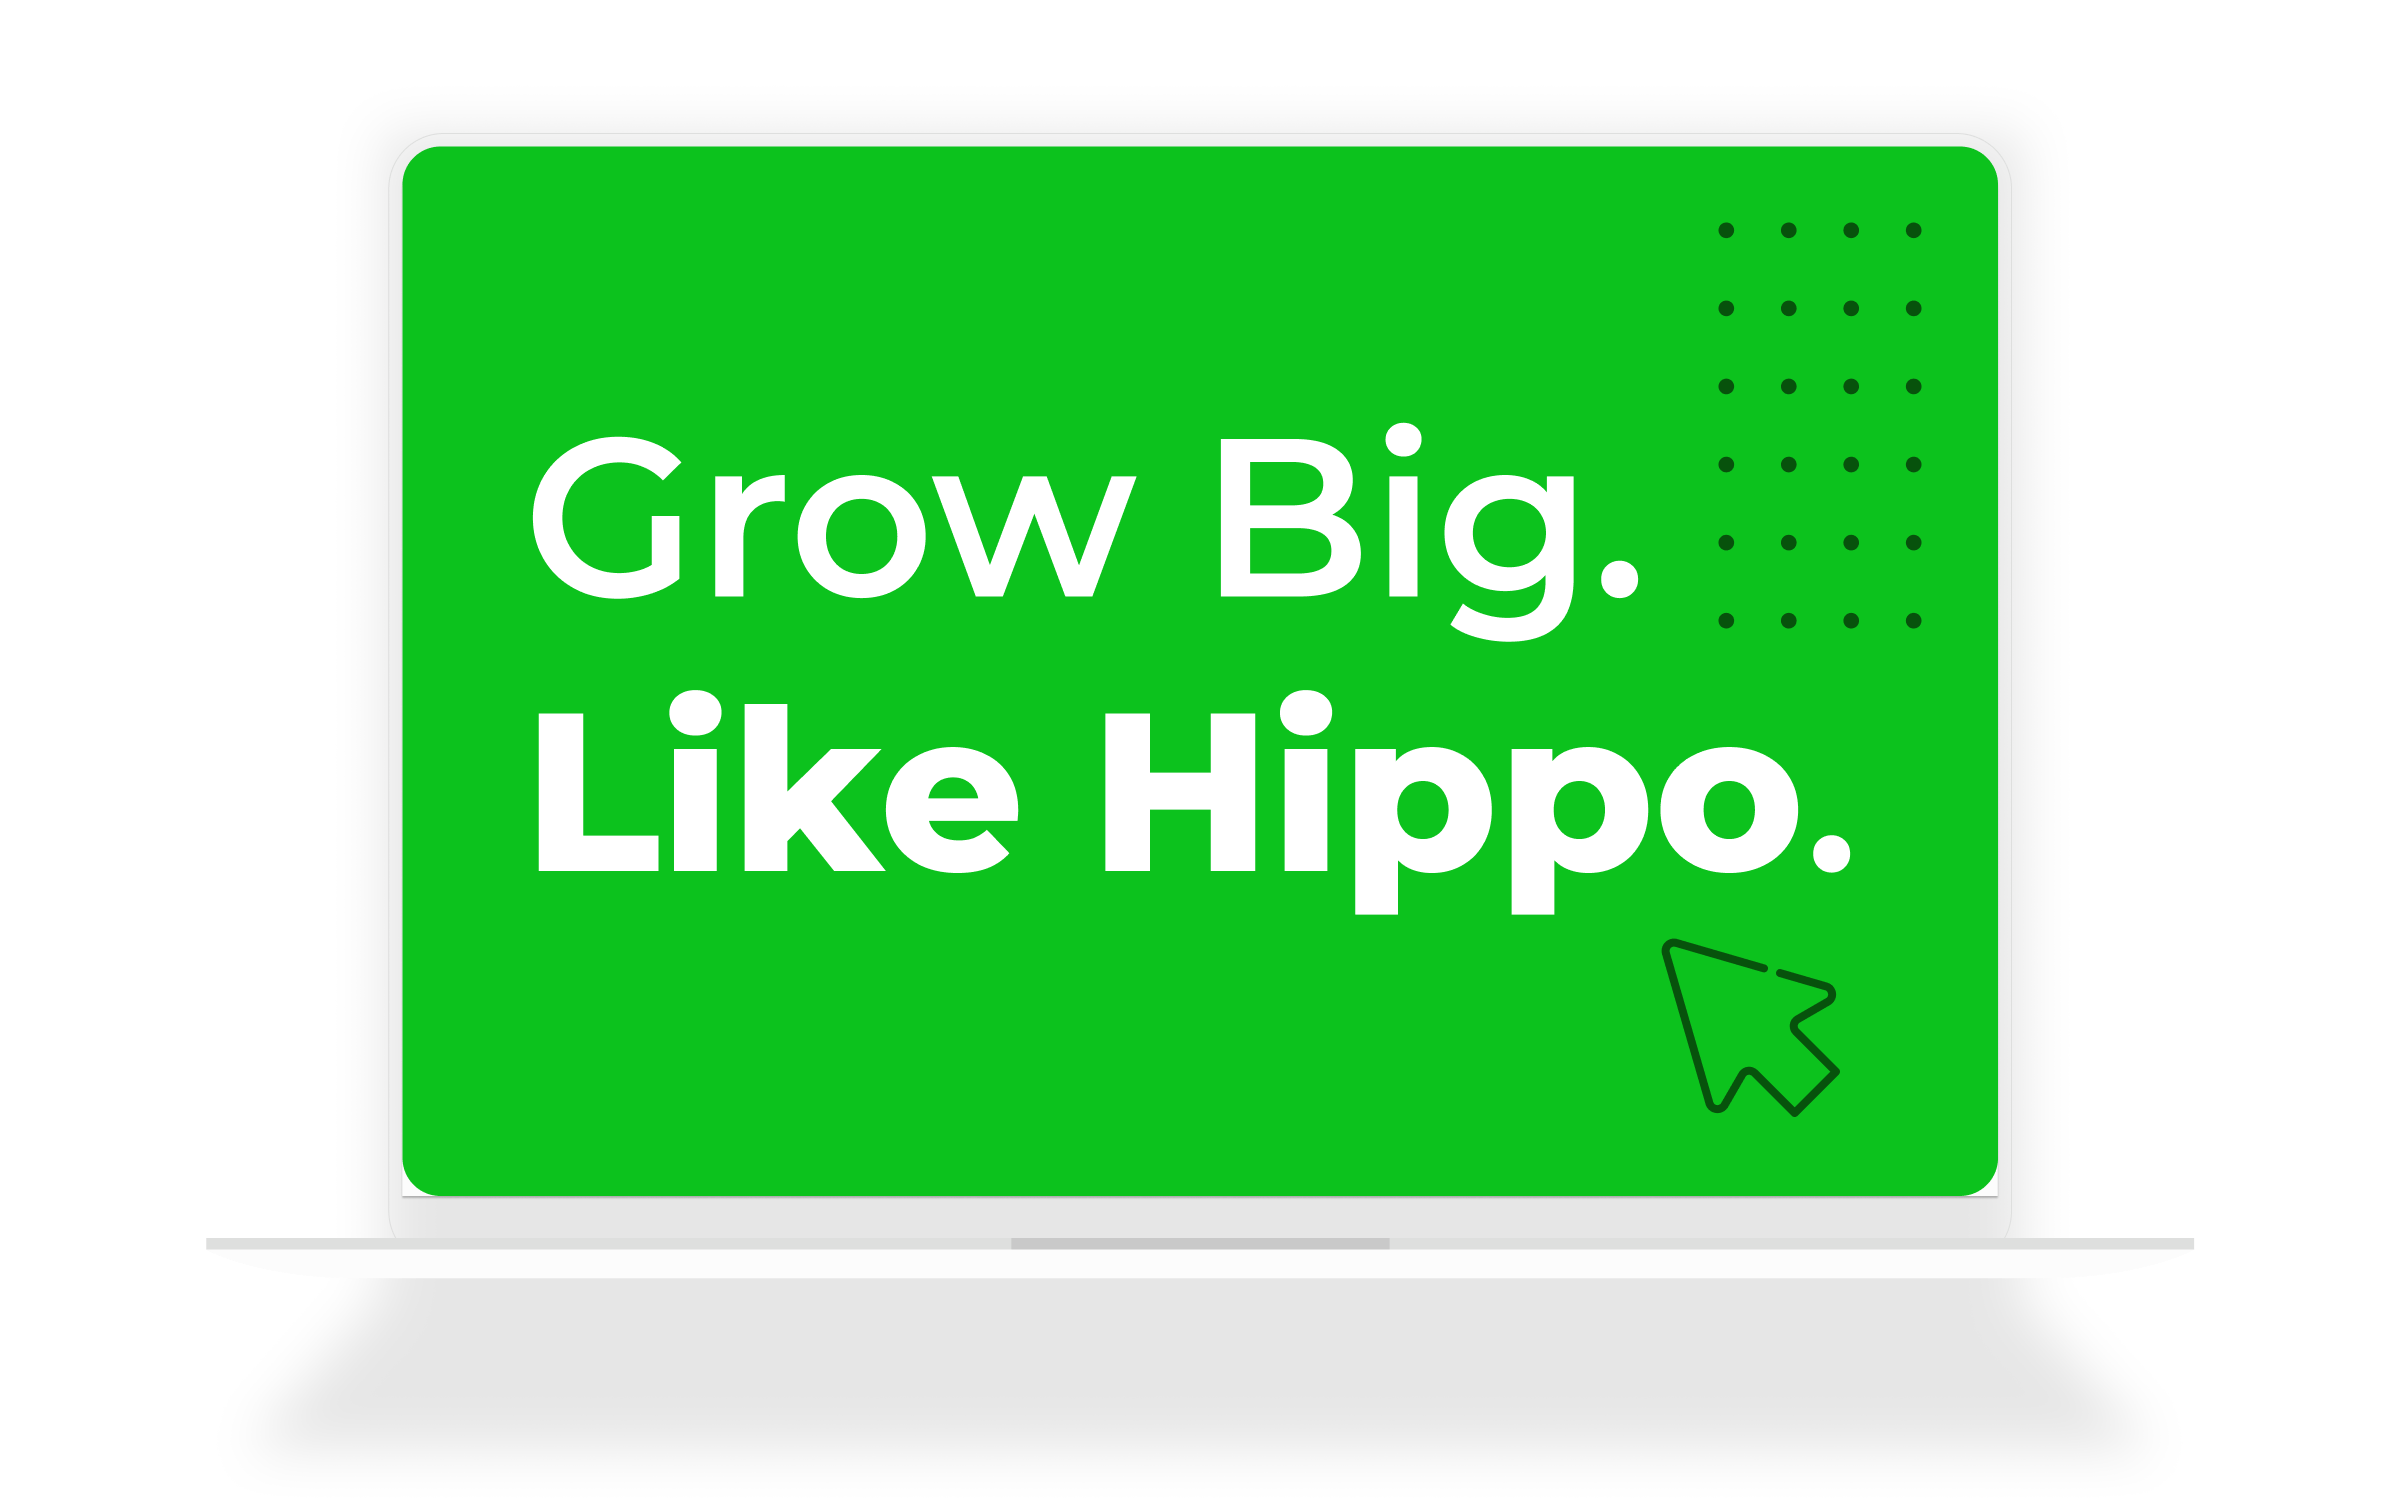 Grow Big. Like Hippo.